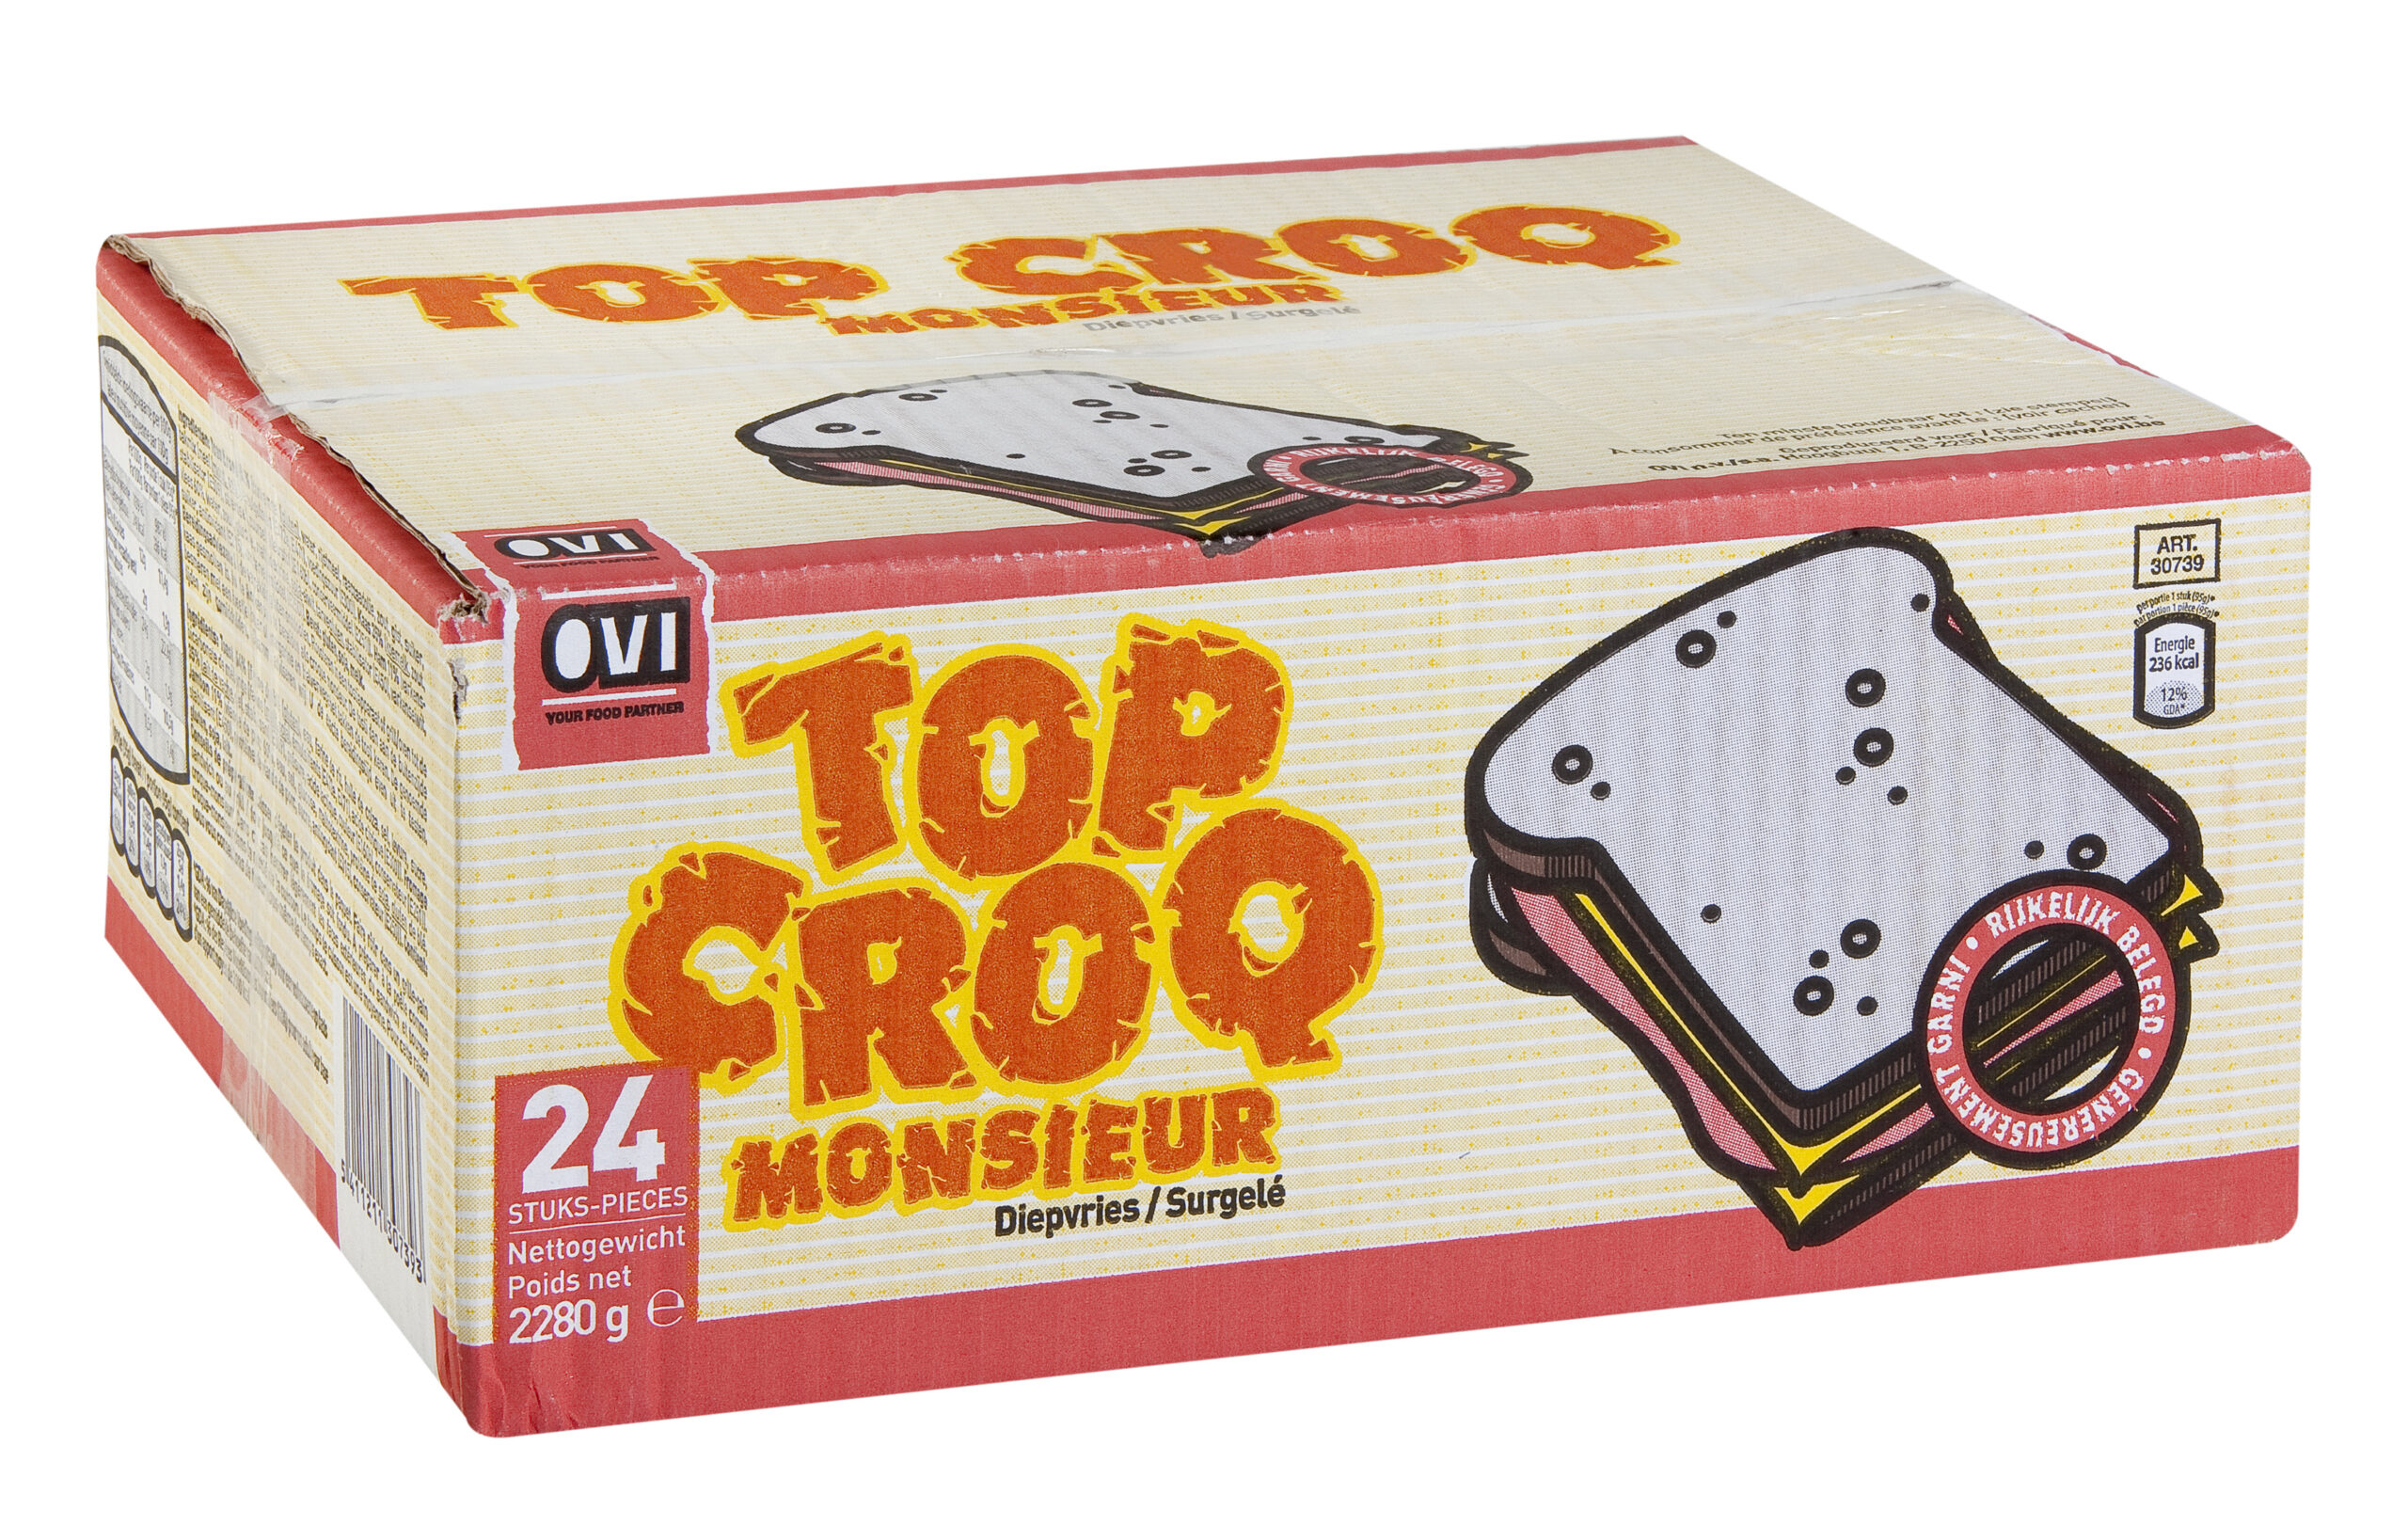 Top Croq monsieur 24 x 95 g OVI